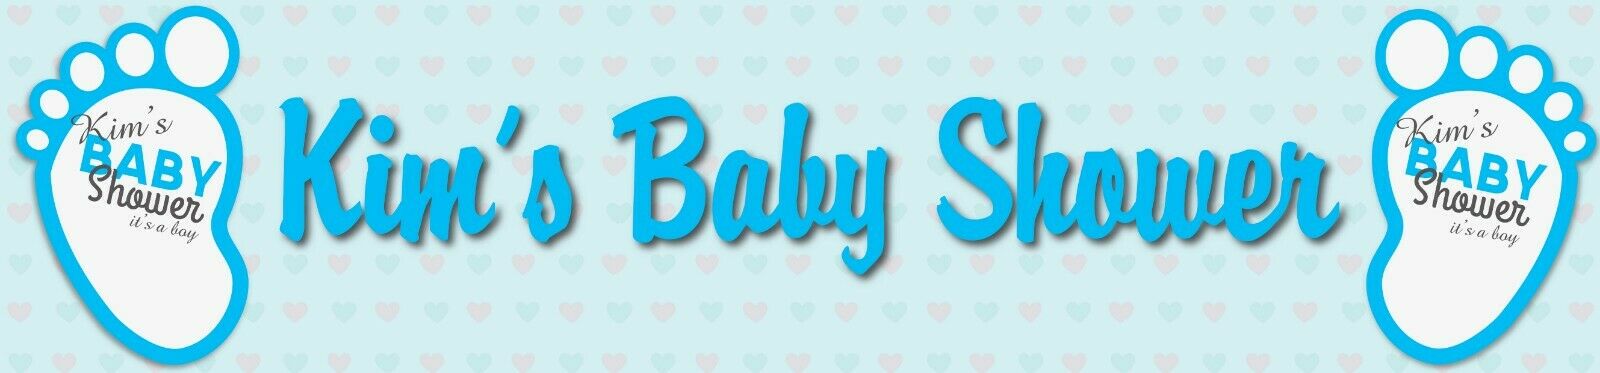 baby shower banner - blue